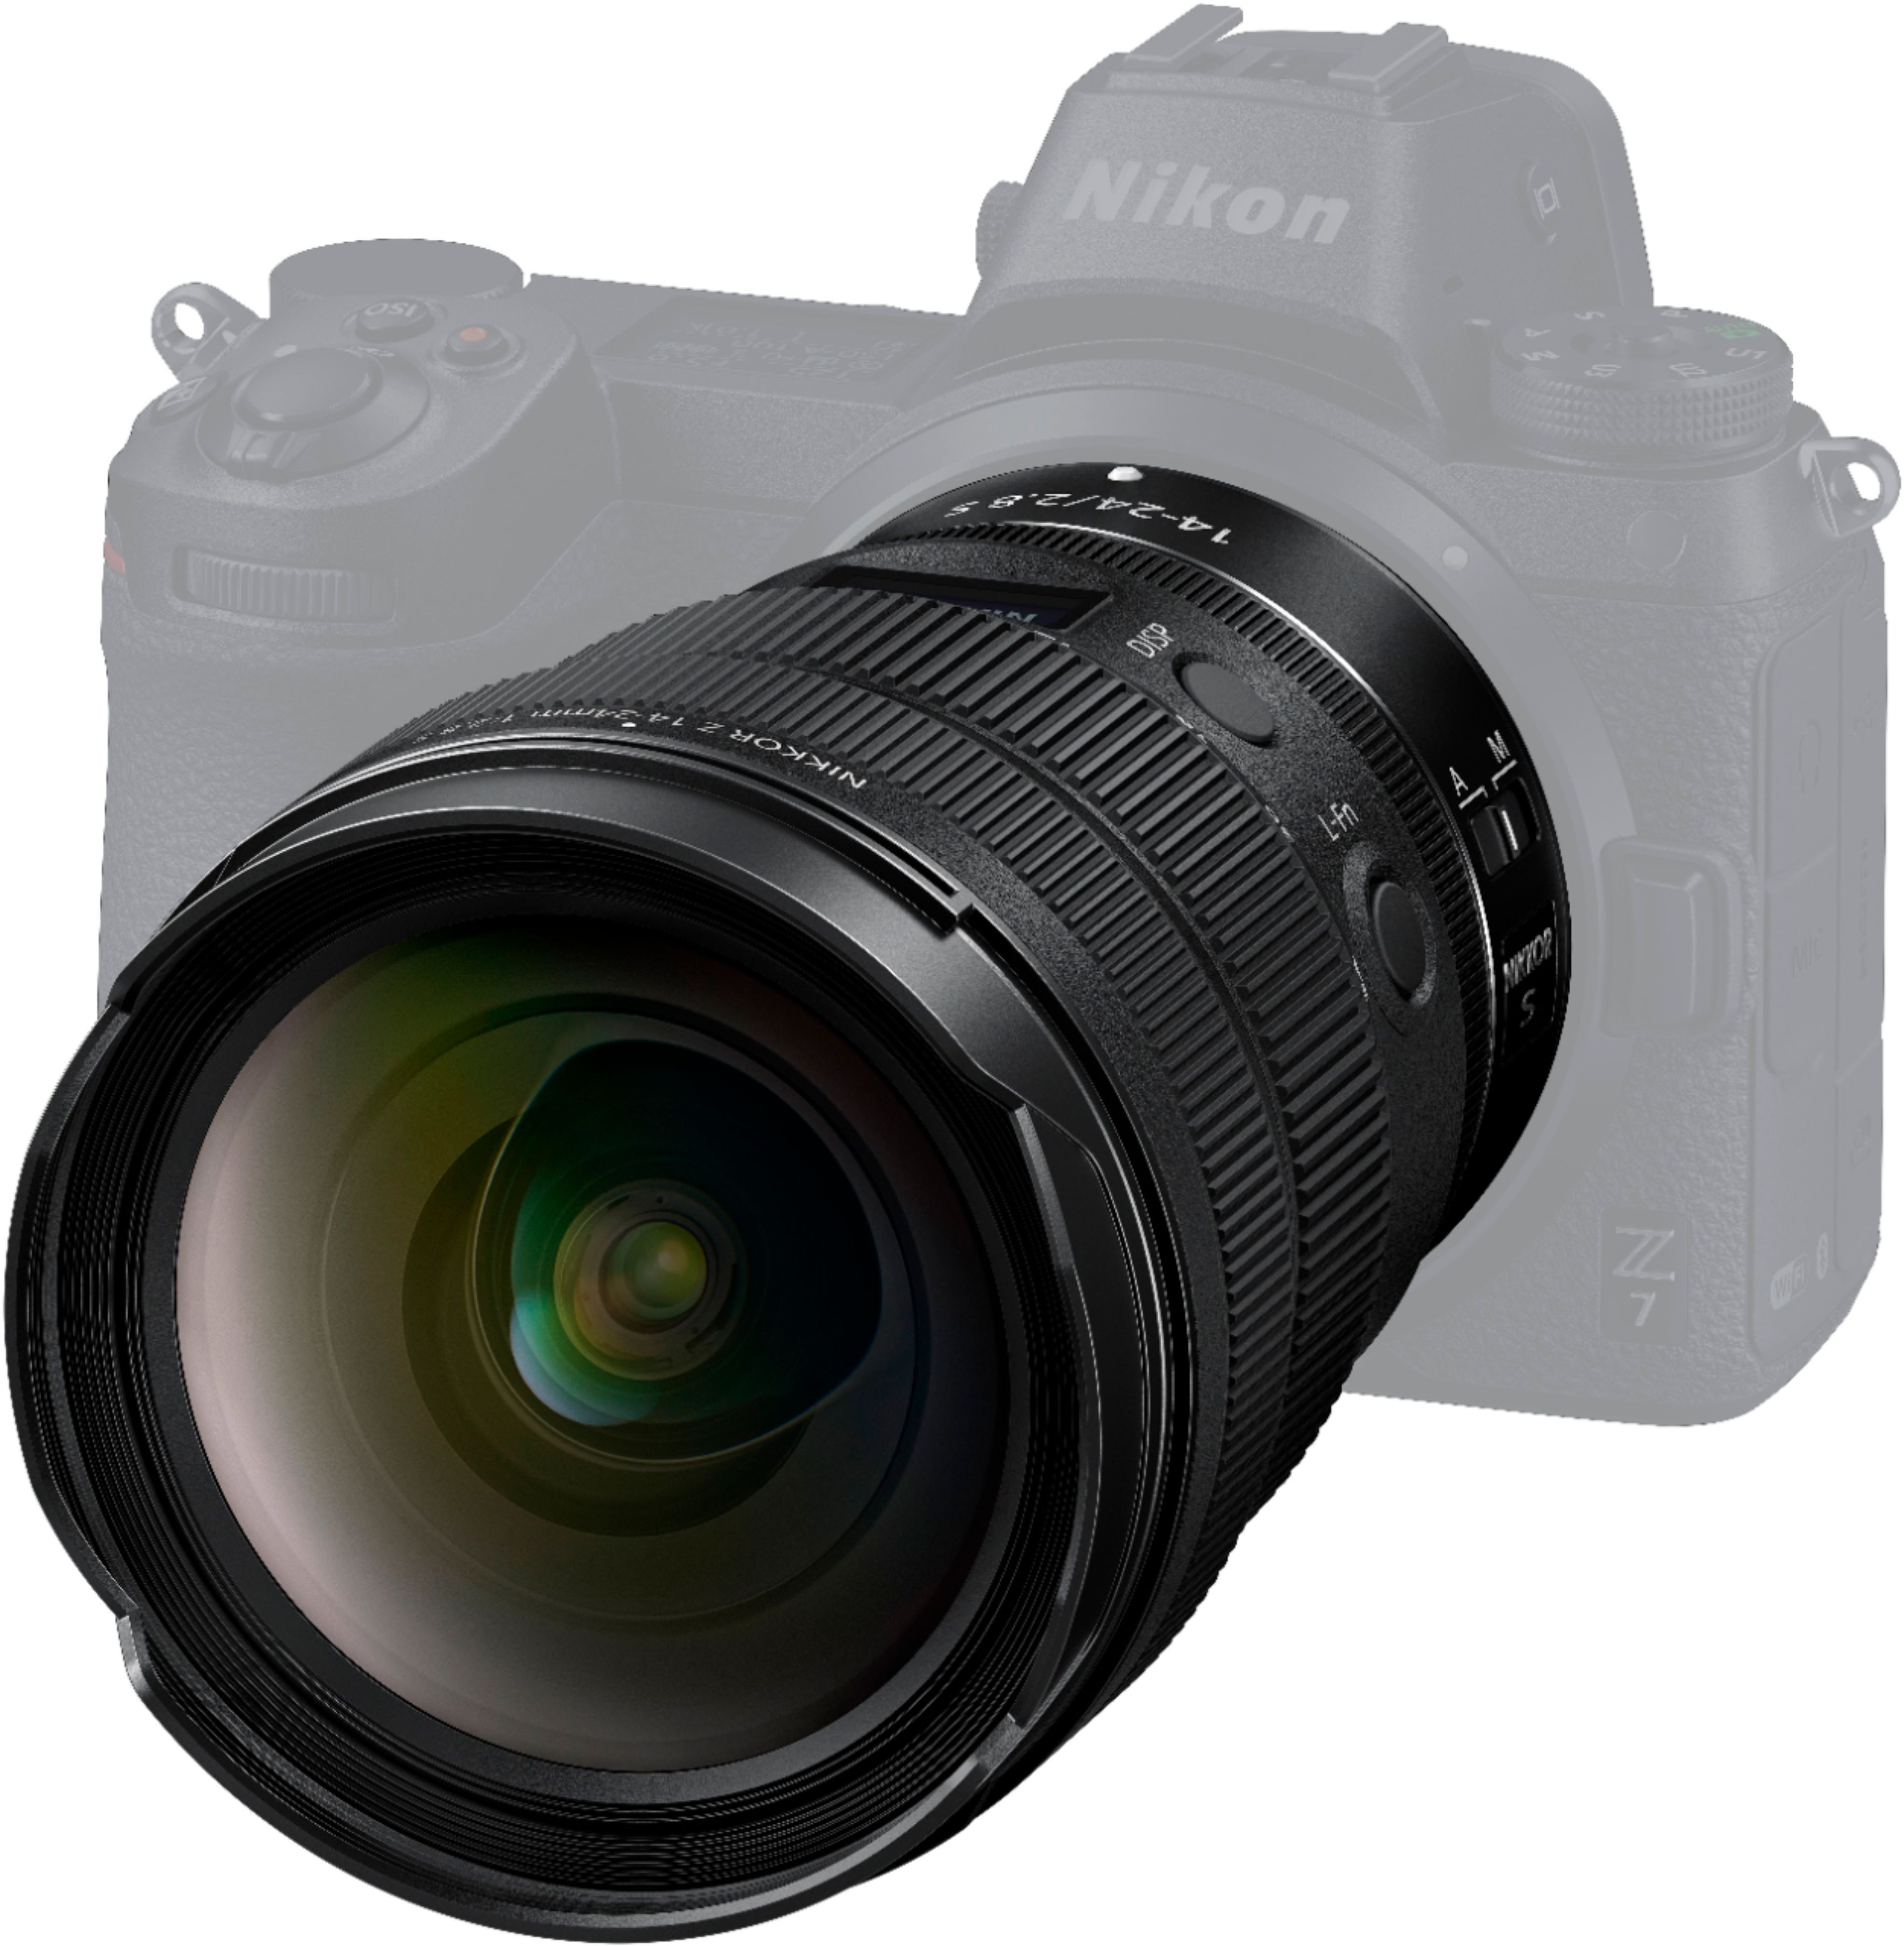 Back View: NIKKOR Z 24-70mm f/4 S Standard Zoom Lens for Nikon Z Cameras - Black